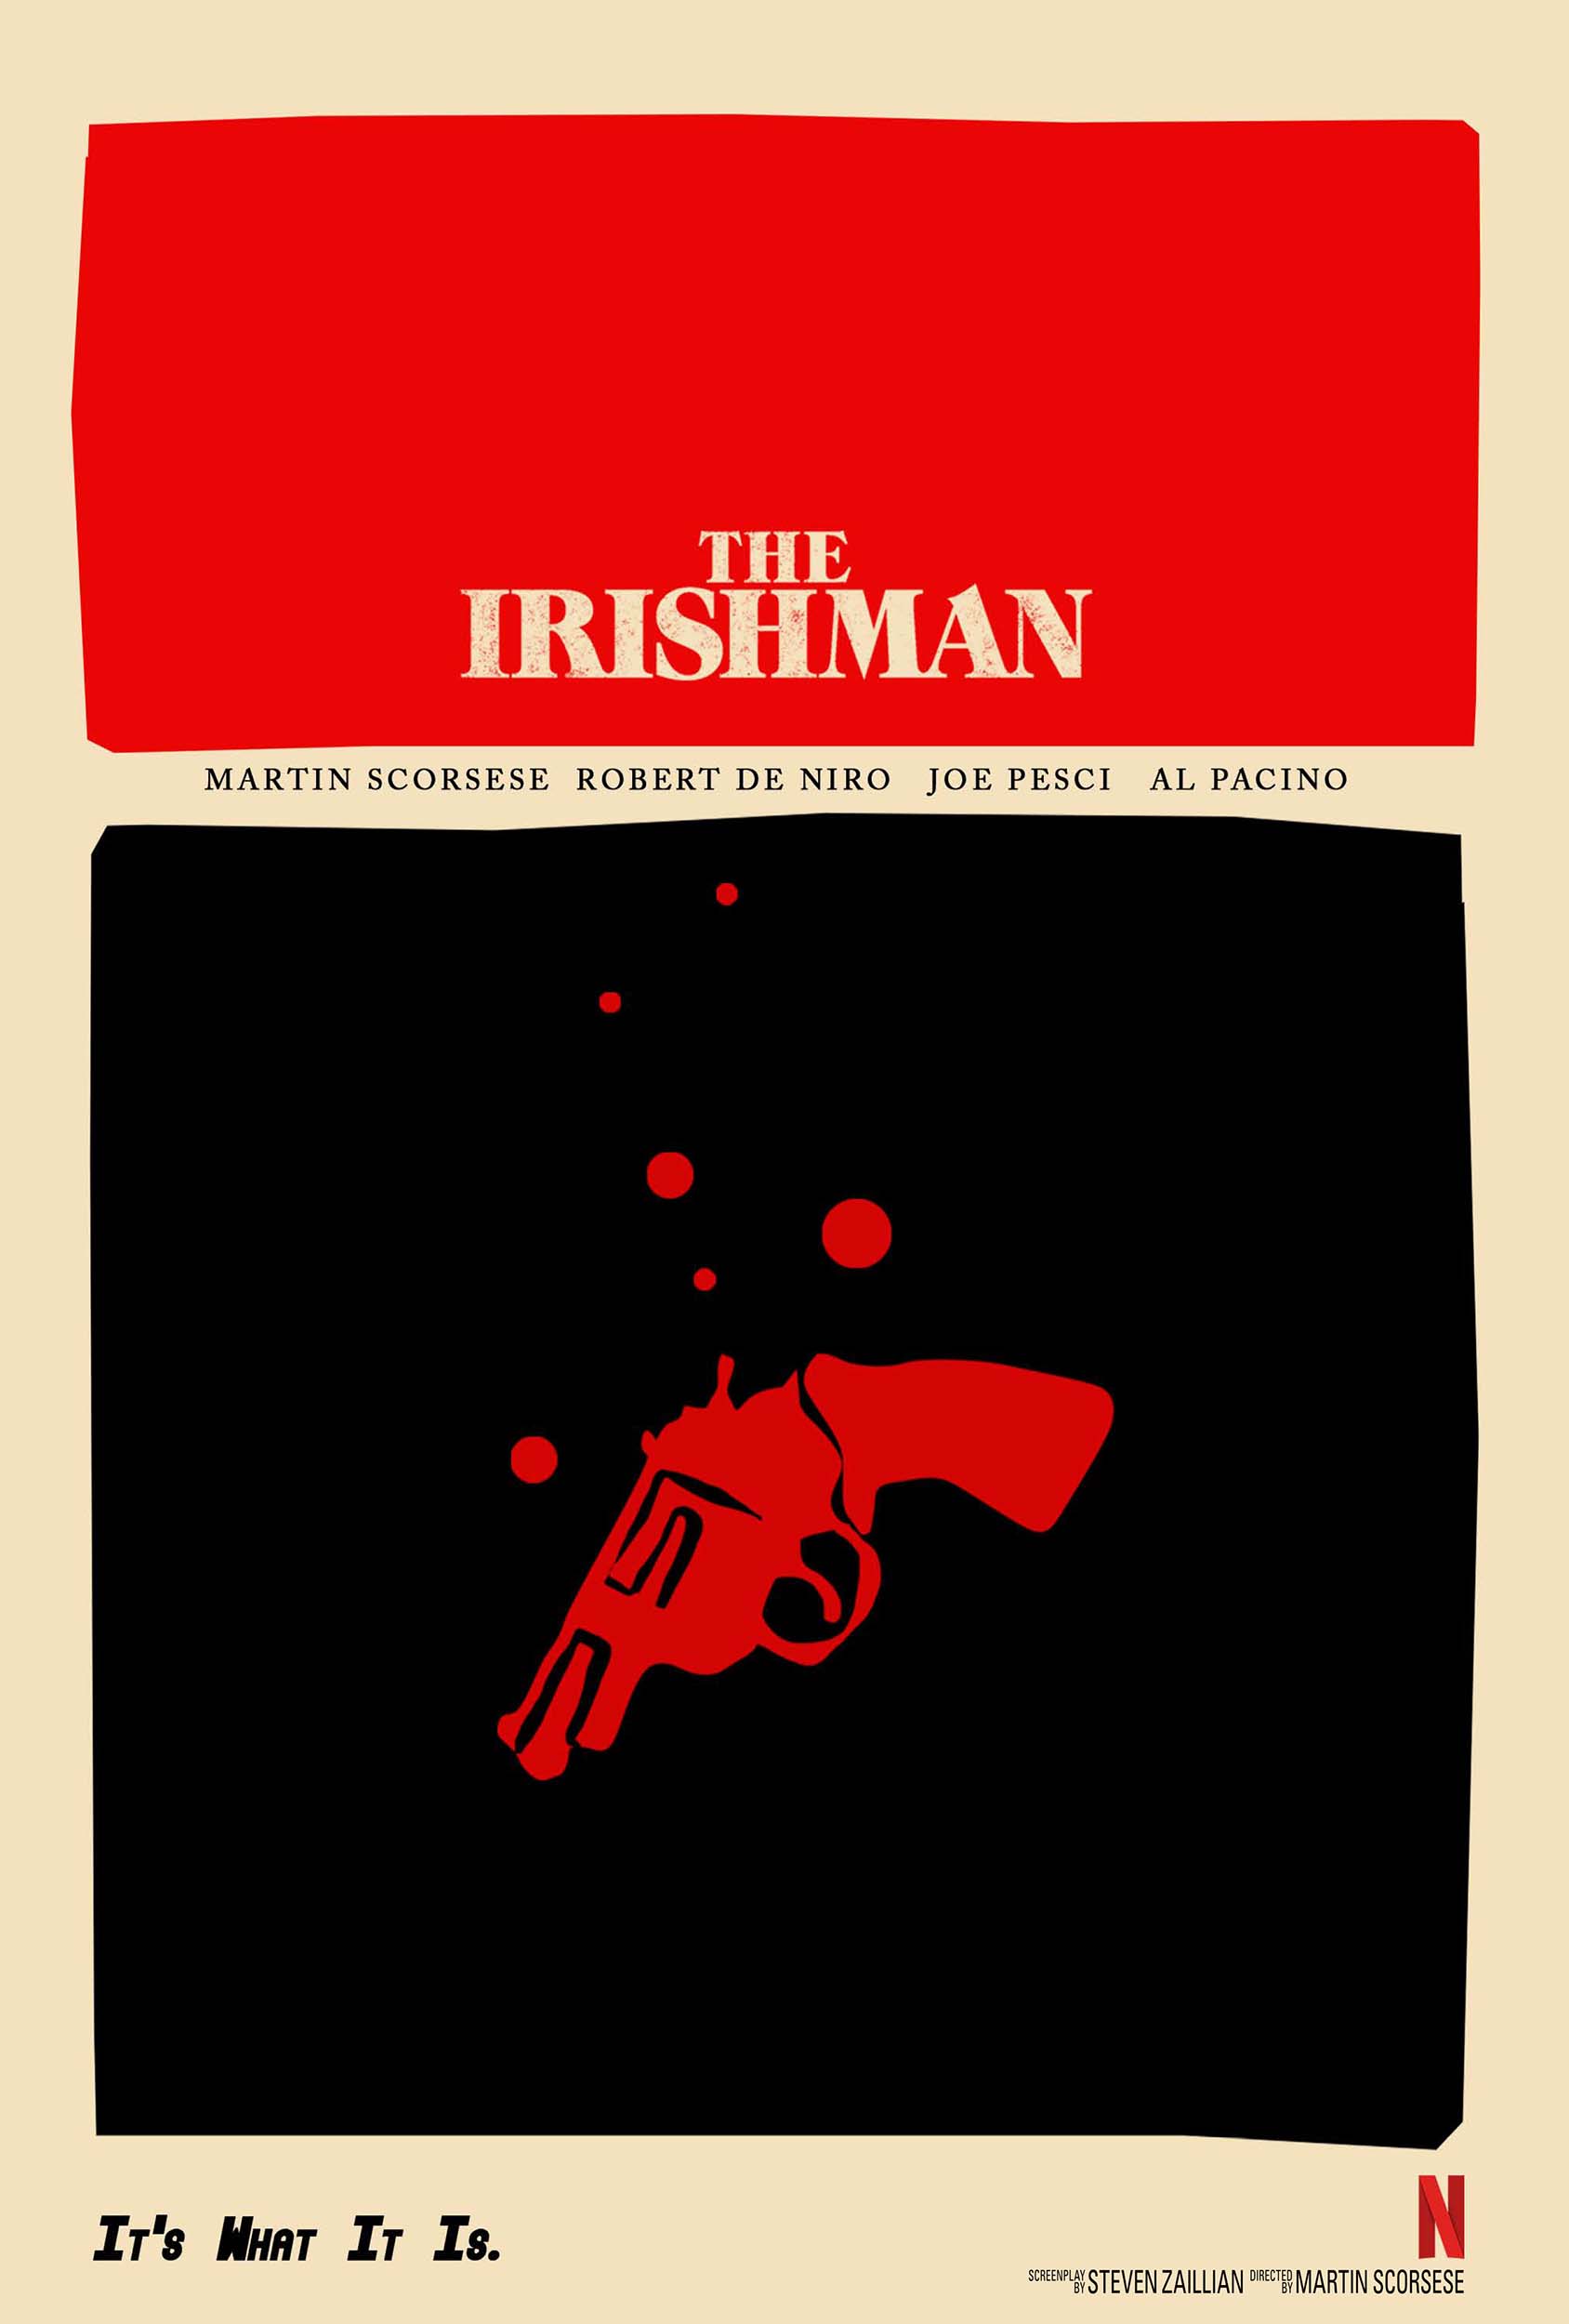 The Irishman Poster 48x32" 40x27" 36x24" 2019 Movie Film Print Silk 